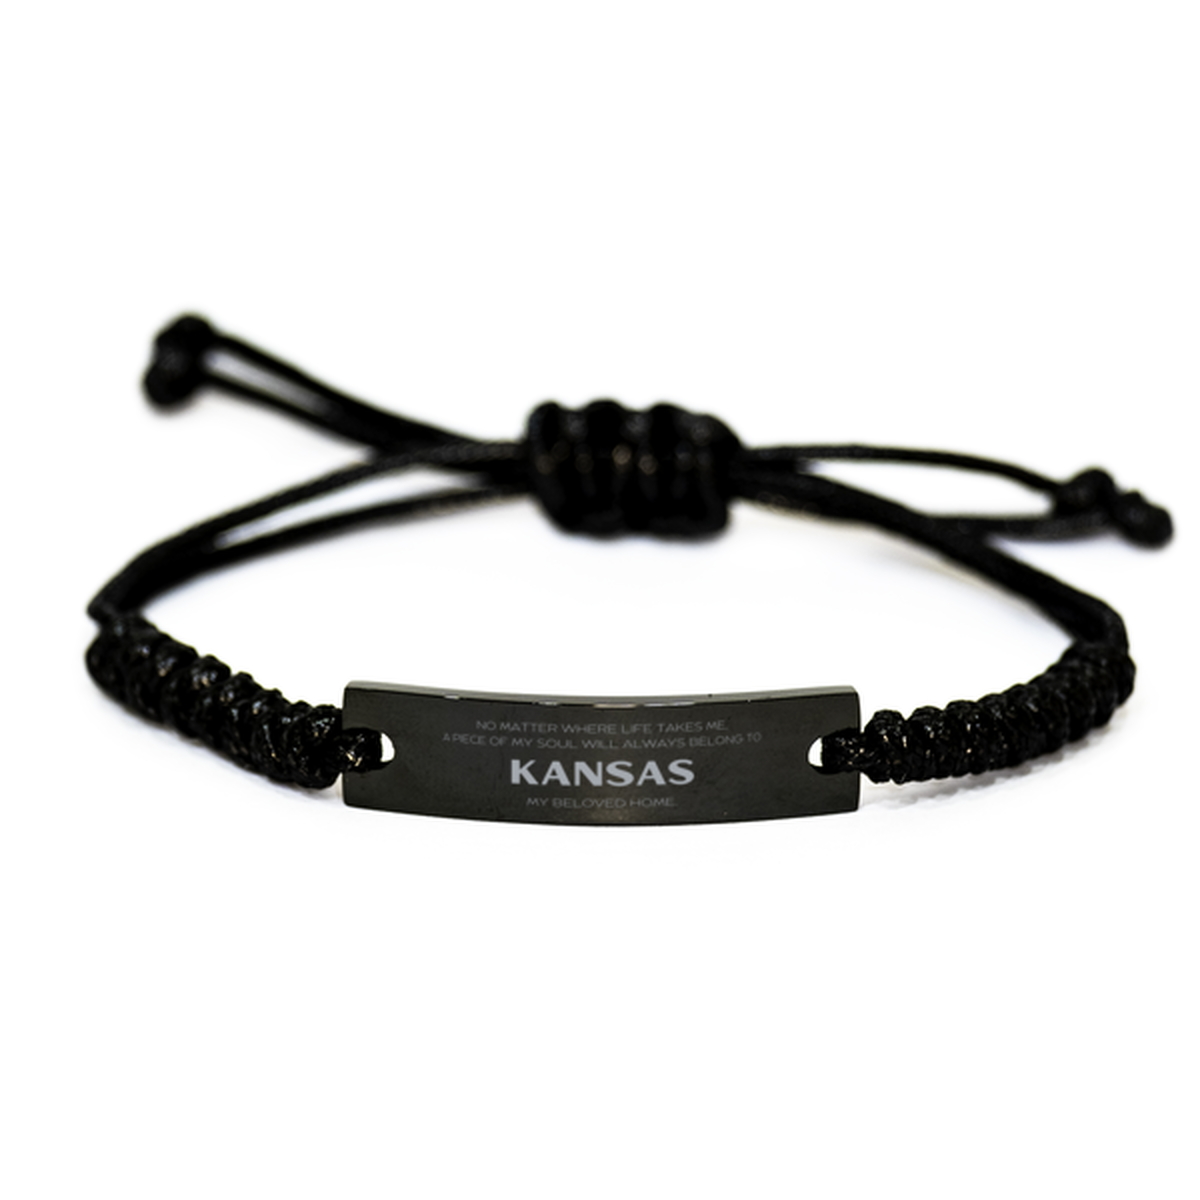 Love Kansas State Gifts, My soul will always belong to Kansas, Proud Black Rope Bracelet, Birthday Unique Gifts For Kansas Men, Women, Friends